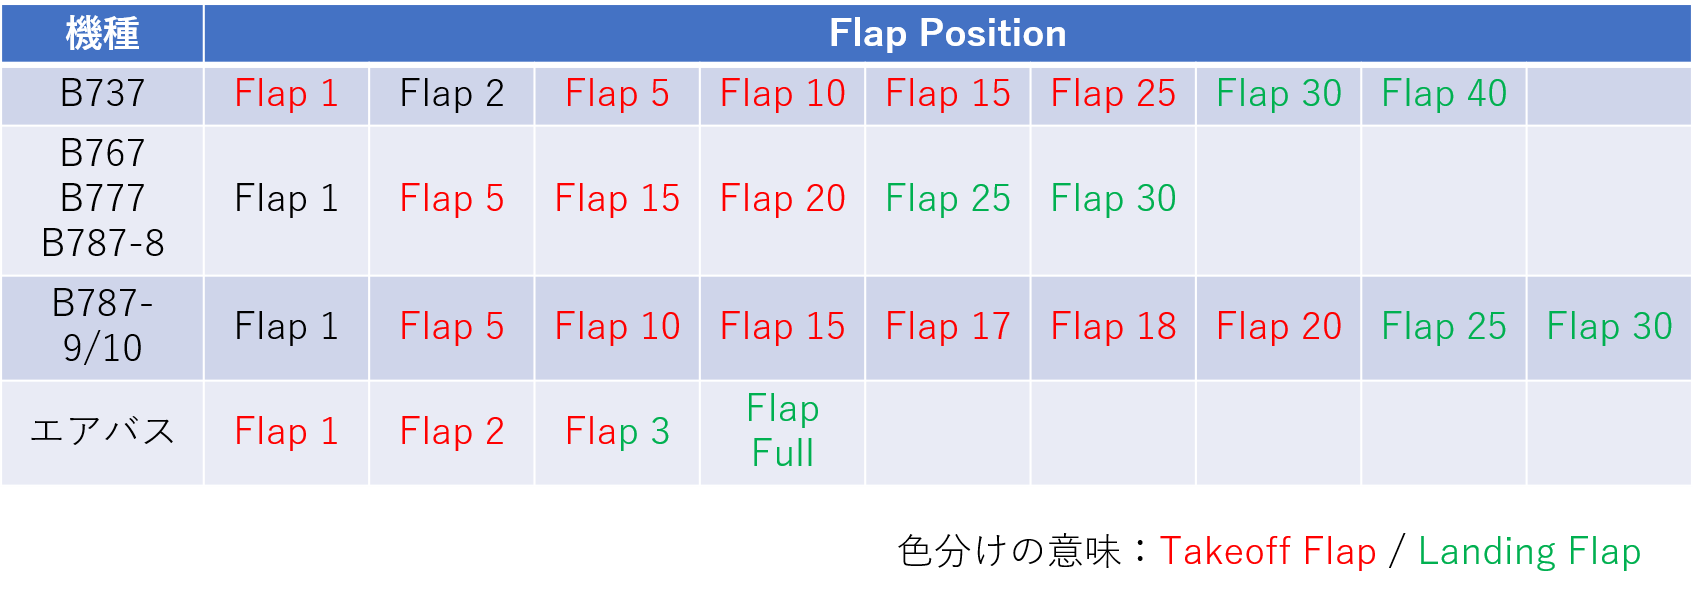 Flap Positionの機種比較まとめ